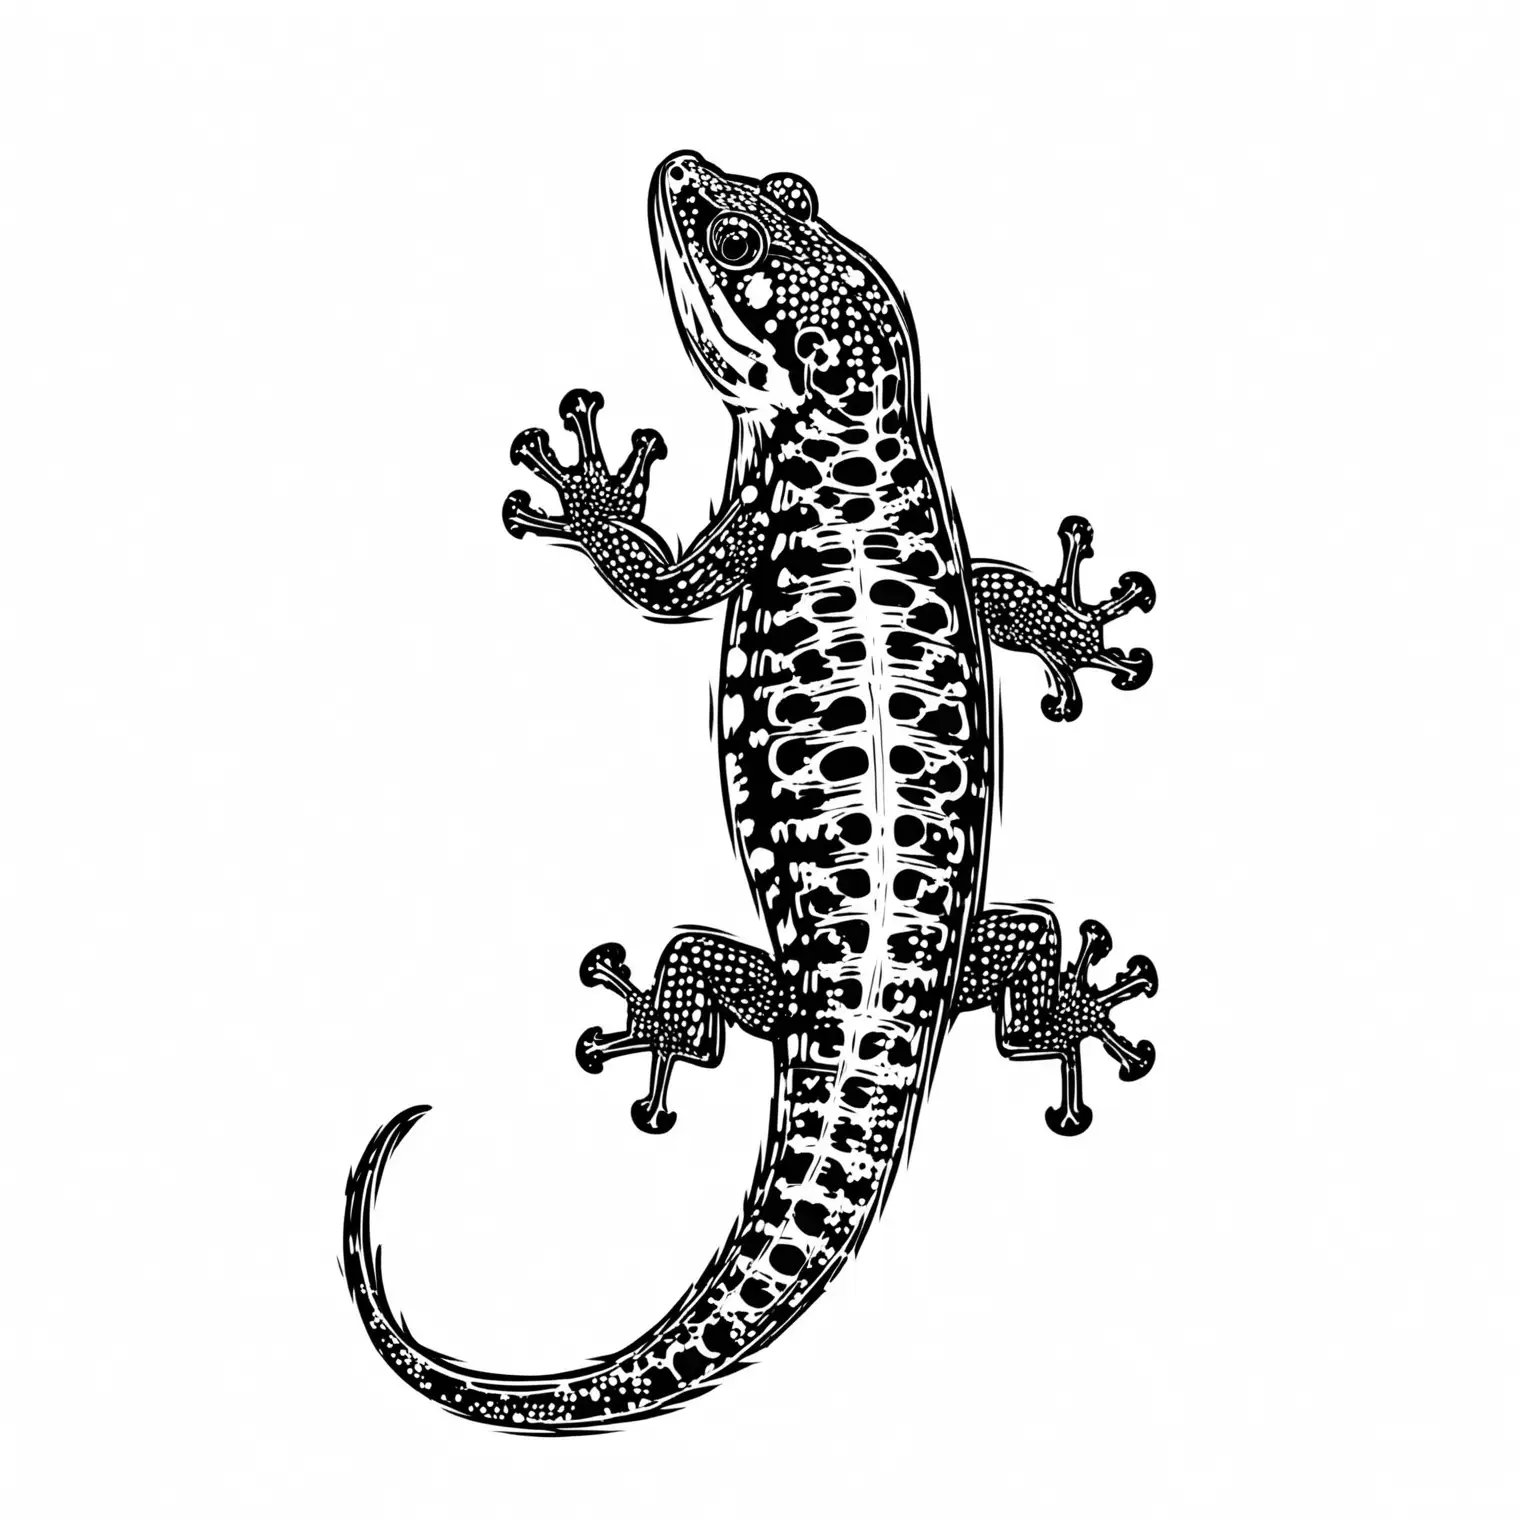 Alpine Salamander Outlines Detailed Monochrome Illustration on White Background